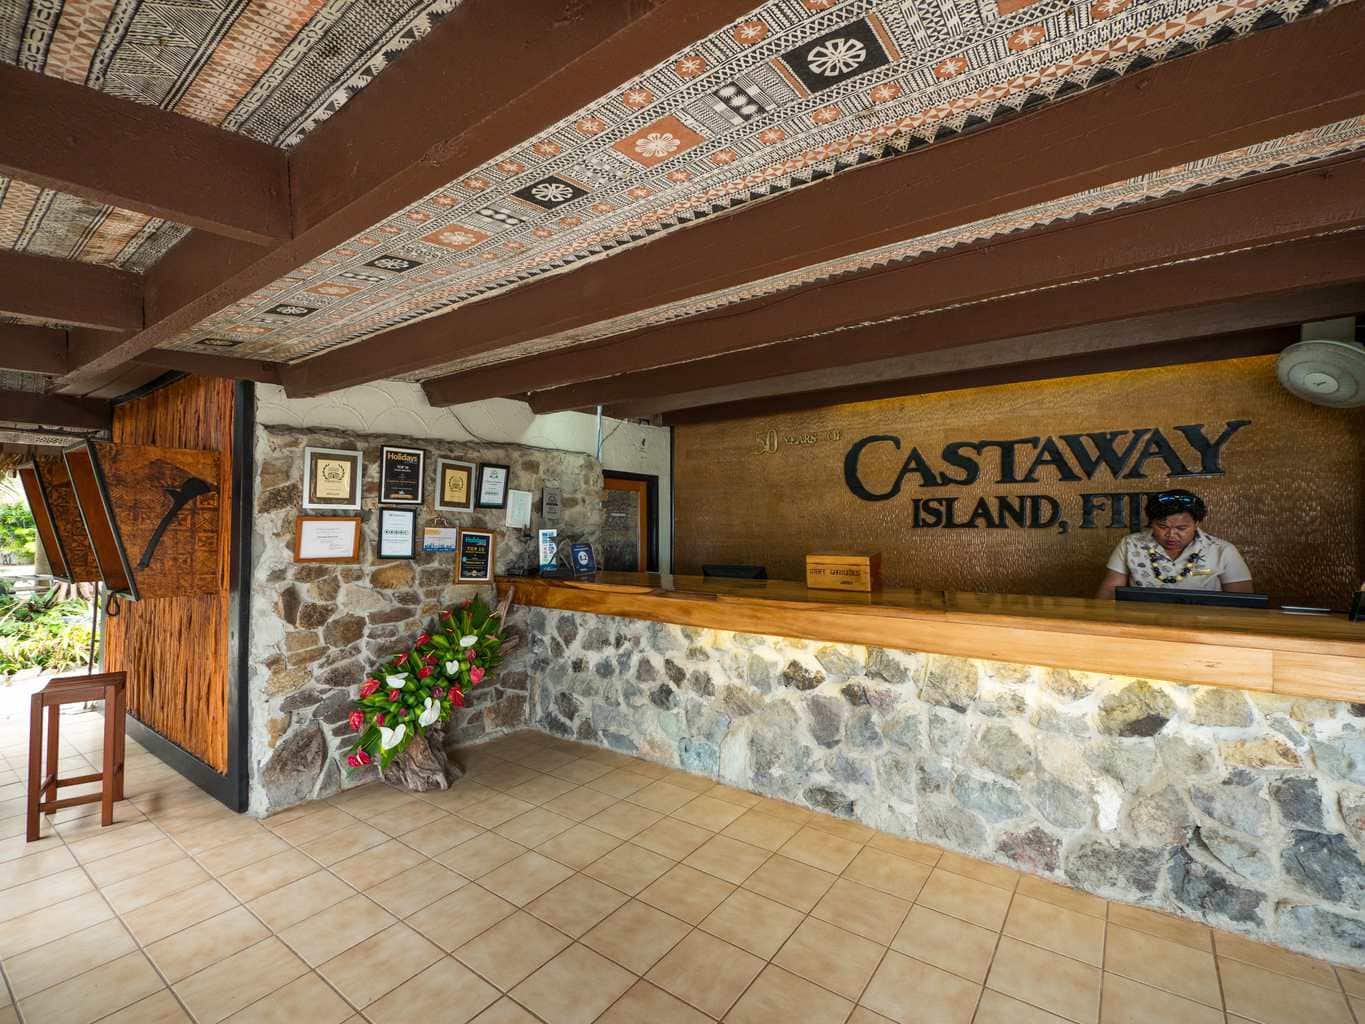 Reception area at the Castaway Island Resort